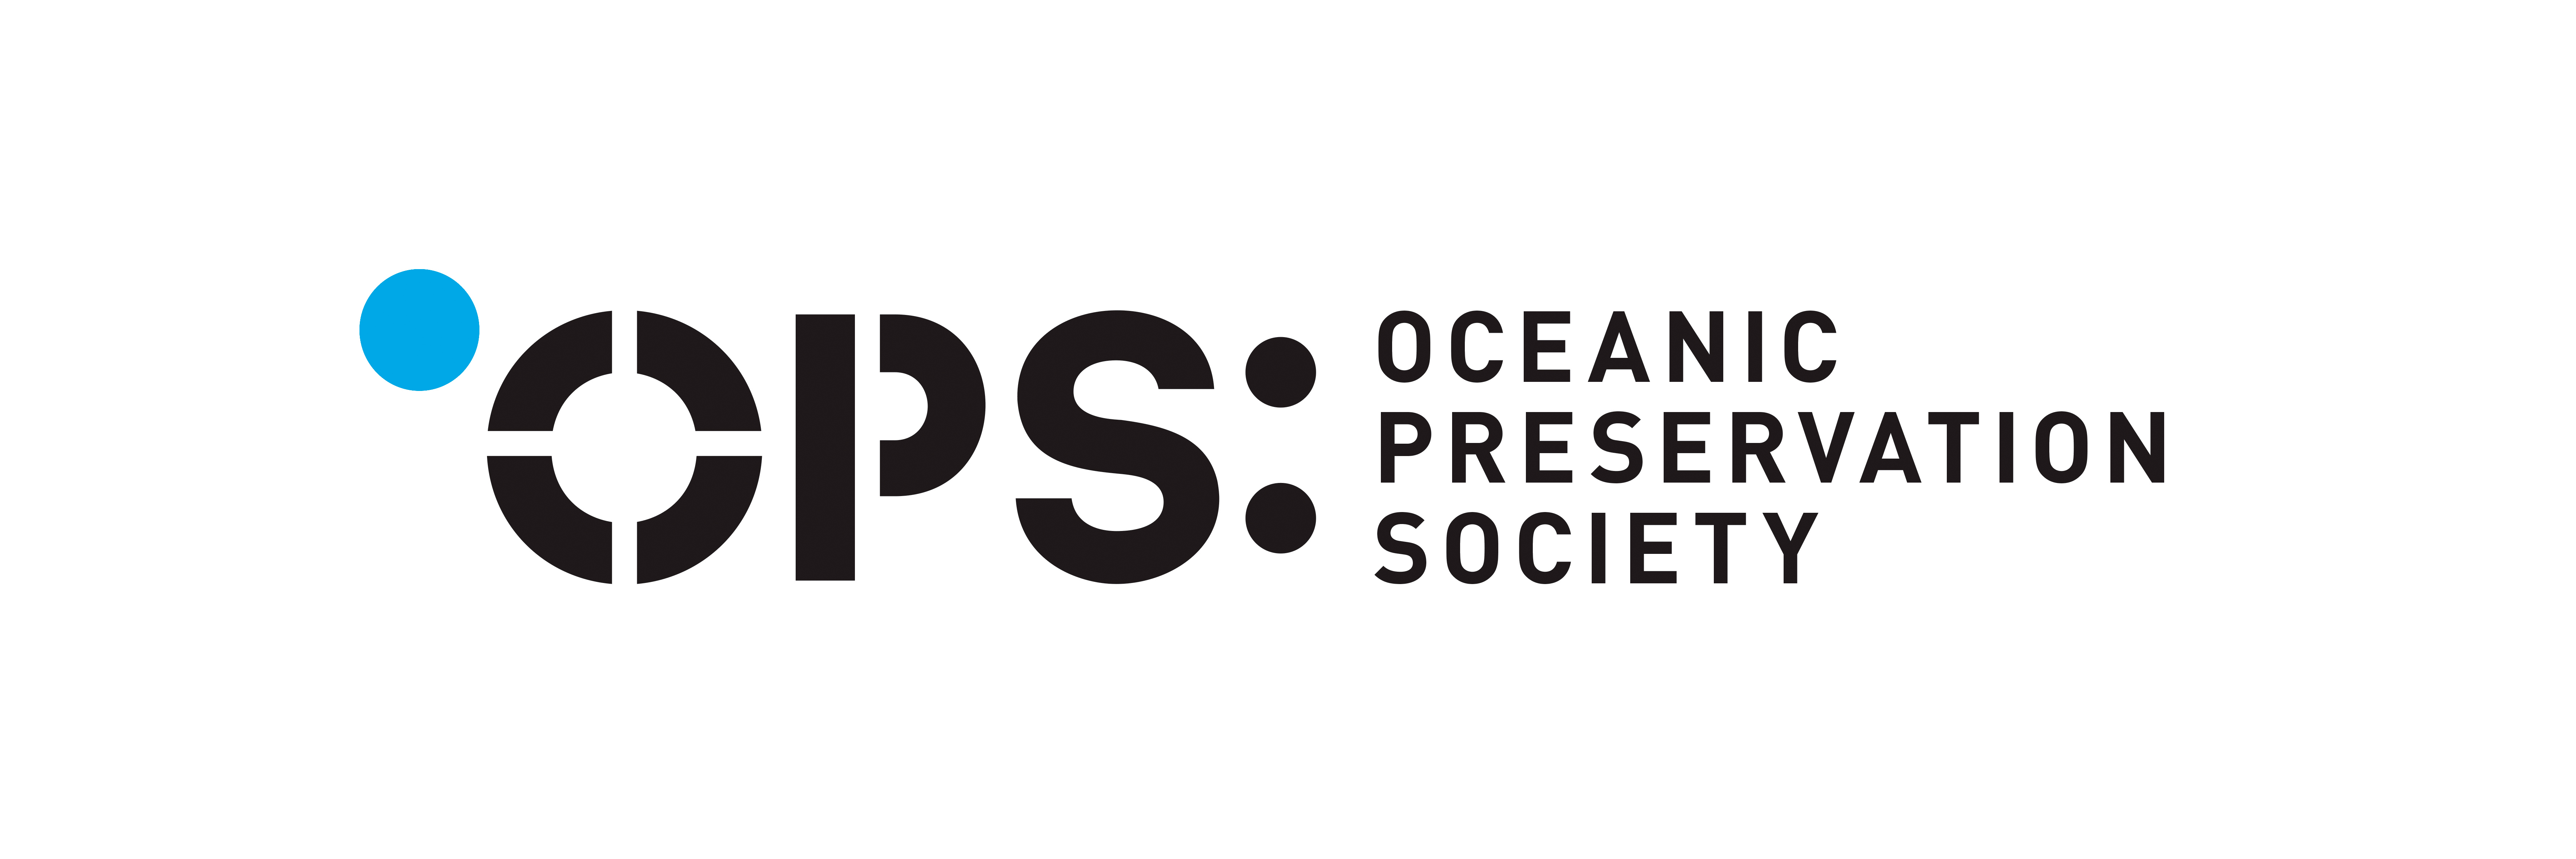 Society com. Oceanic Preservation Society logo. Oceanic Society лого. Society6. Эшре Международное общество логотип.